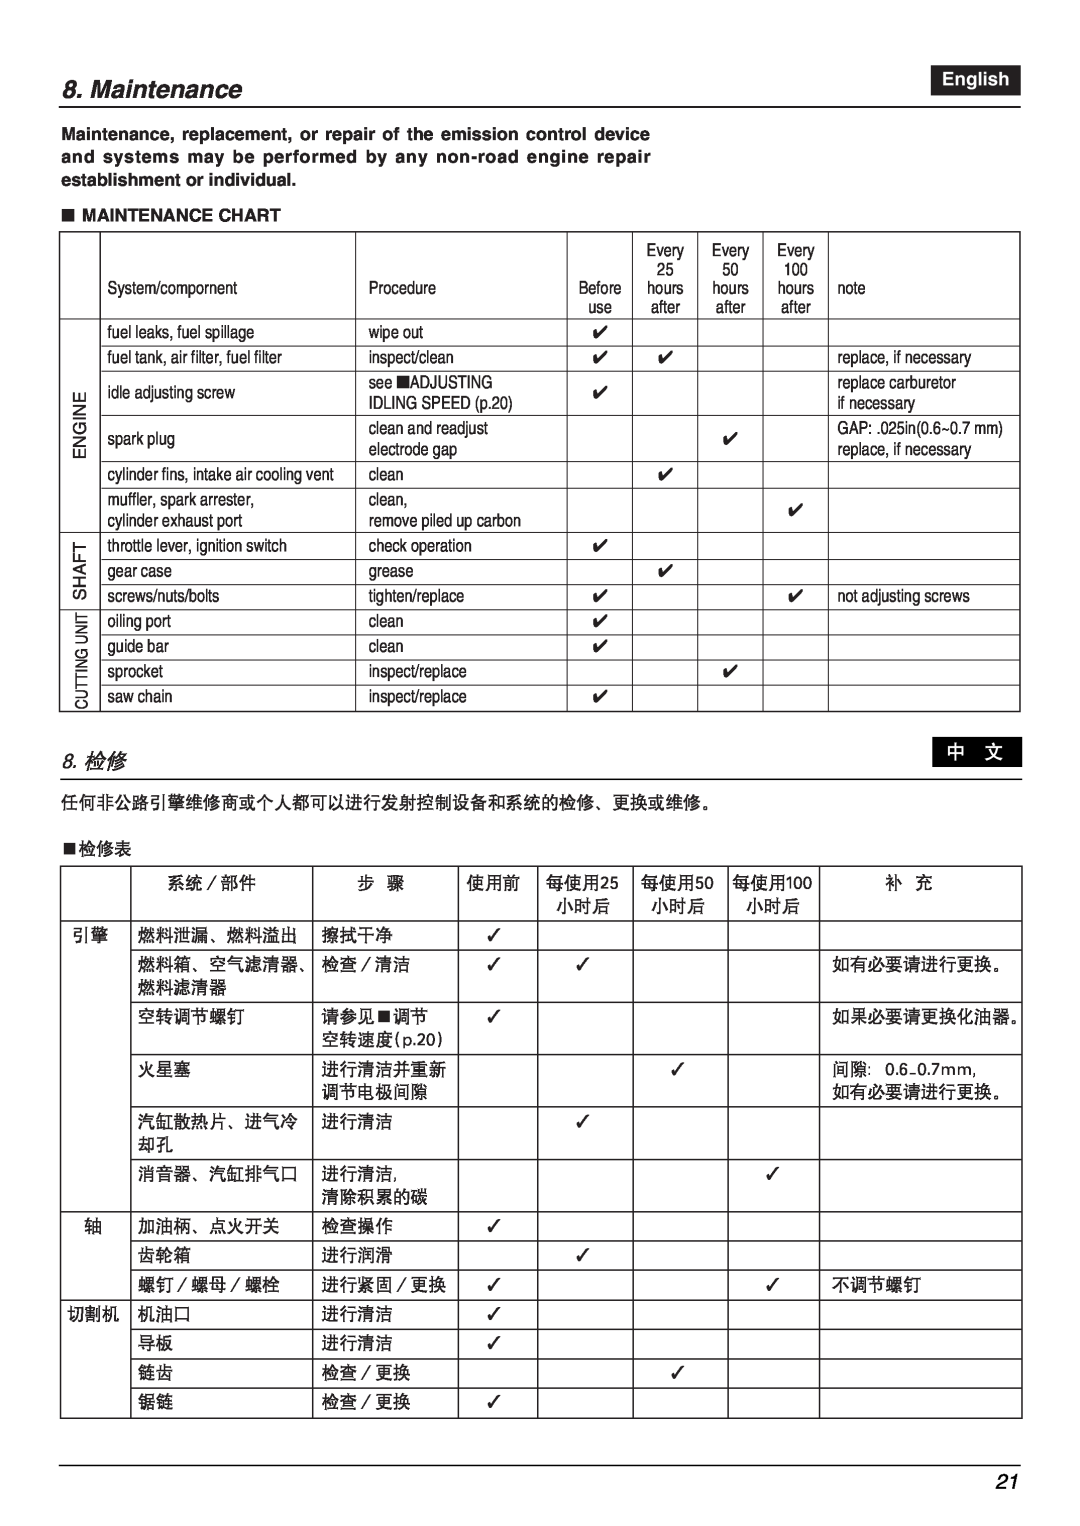 Zenoah PSJ2300 owner manual 8. 检修, Maintenance Chart, English 